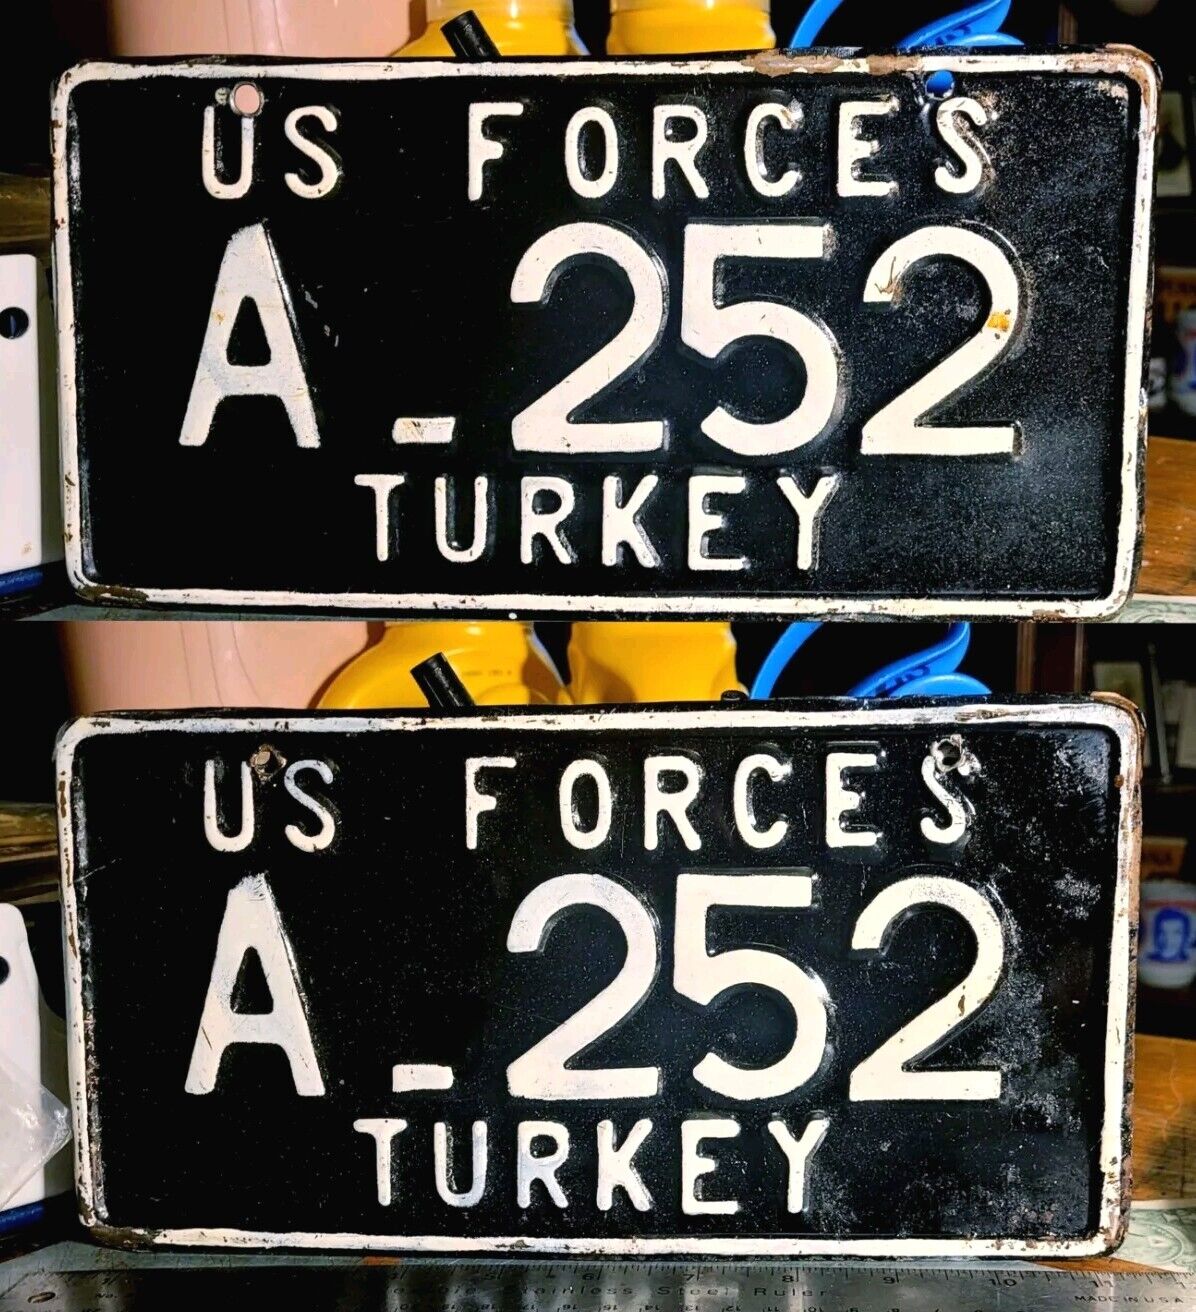 INTL - U.S. FORCES in TURKEY, ADANA NATO base,  scarce PAIR of license plates